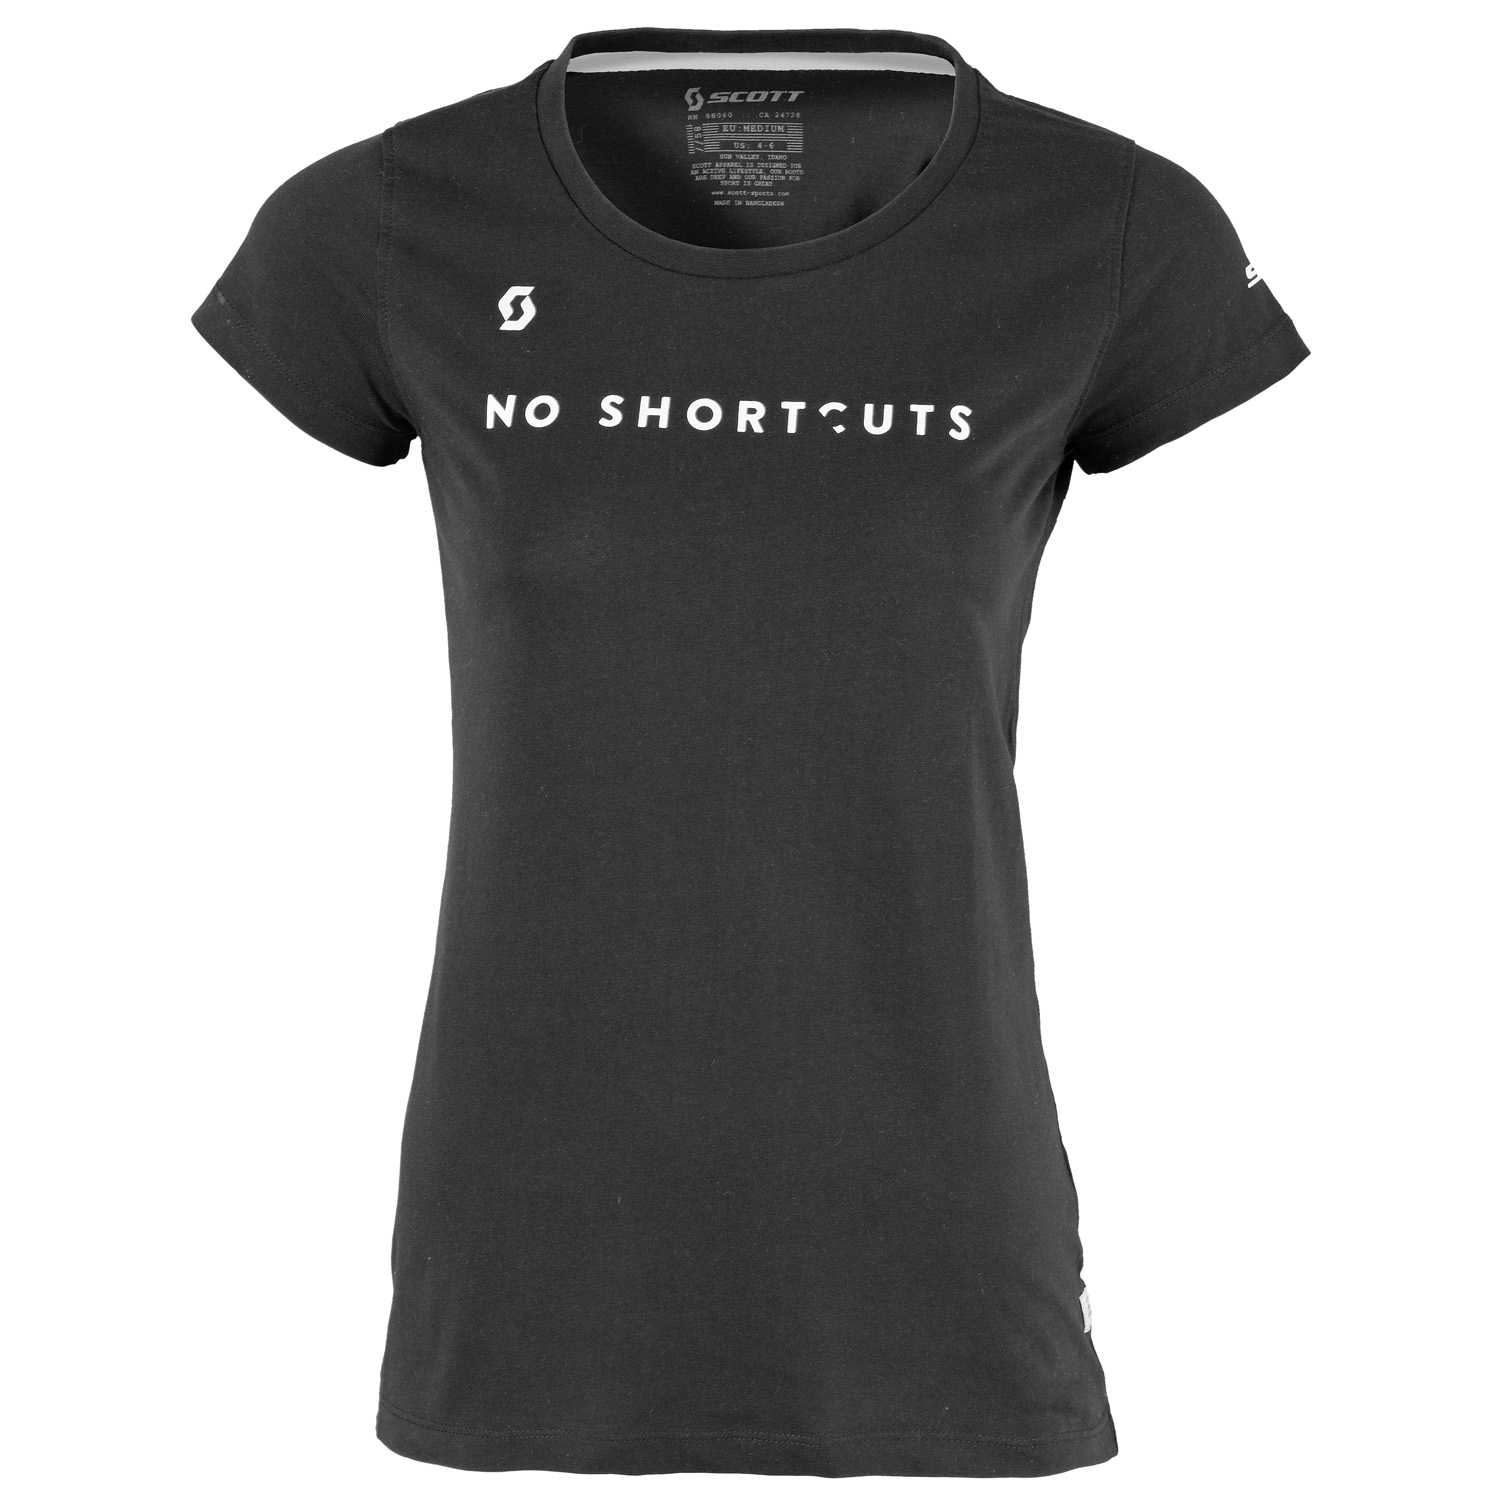 Scott Girls T-Shirt 10 No Shortcuts Black